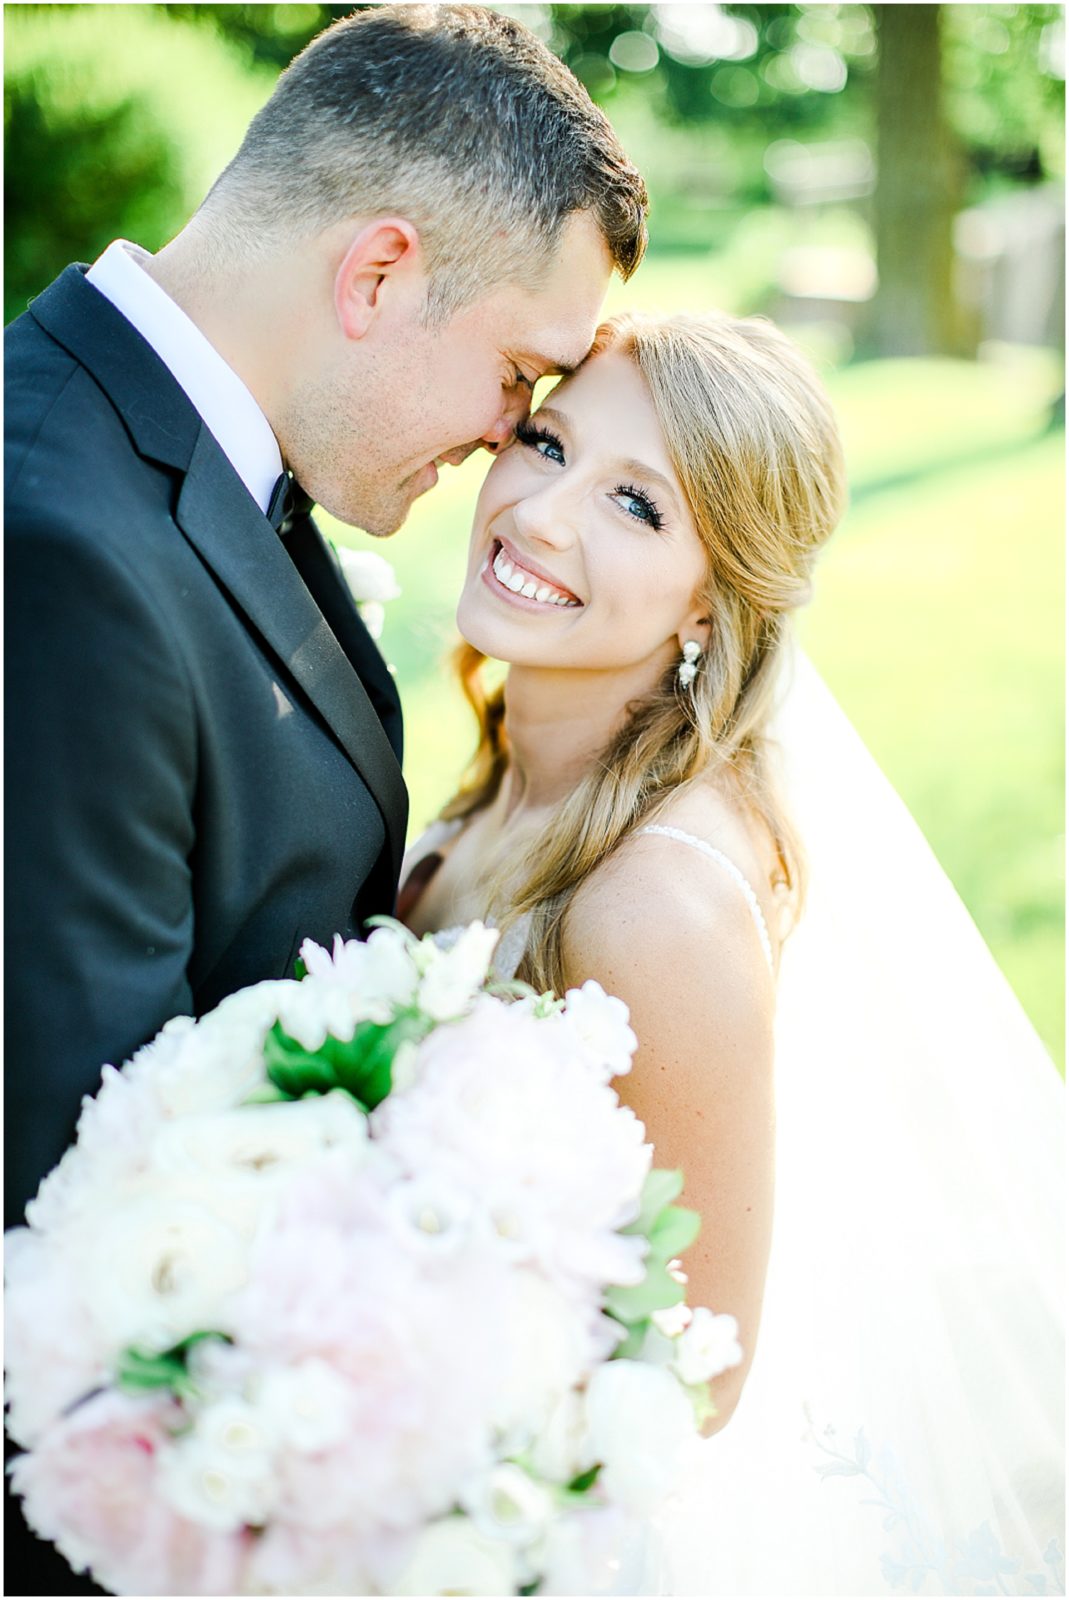 Jamie & Spencer - Summer Wedding at the Historic Longview Mansion - Kansas City Wedding Venues - Mariam Saifan Photography - happy bride